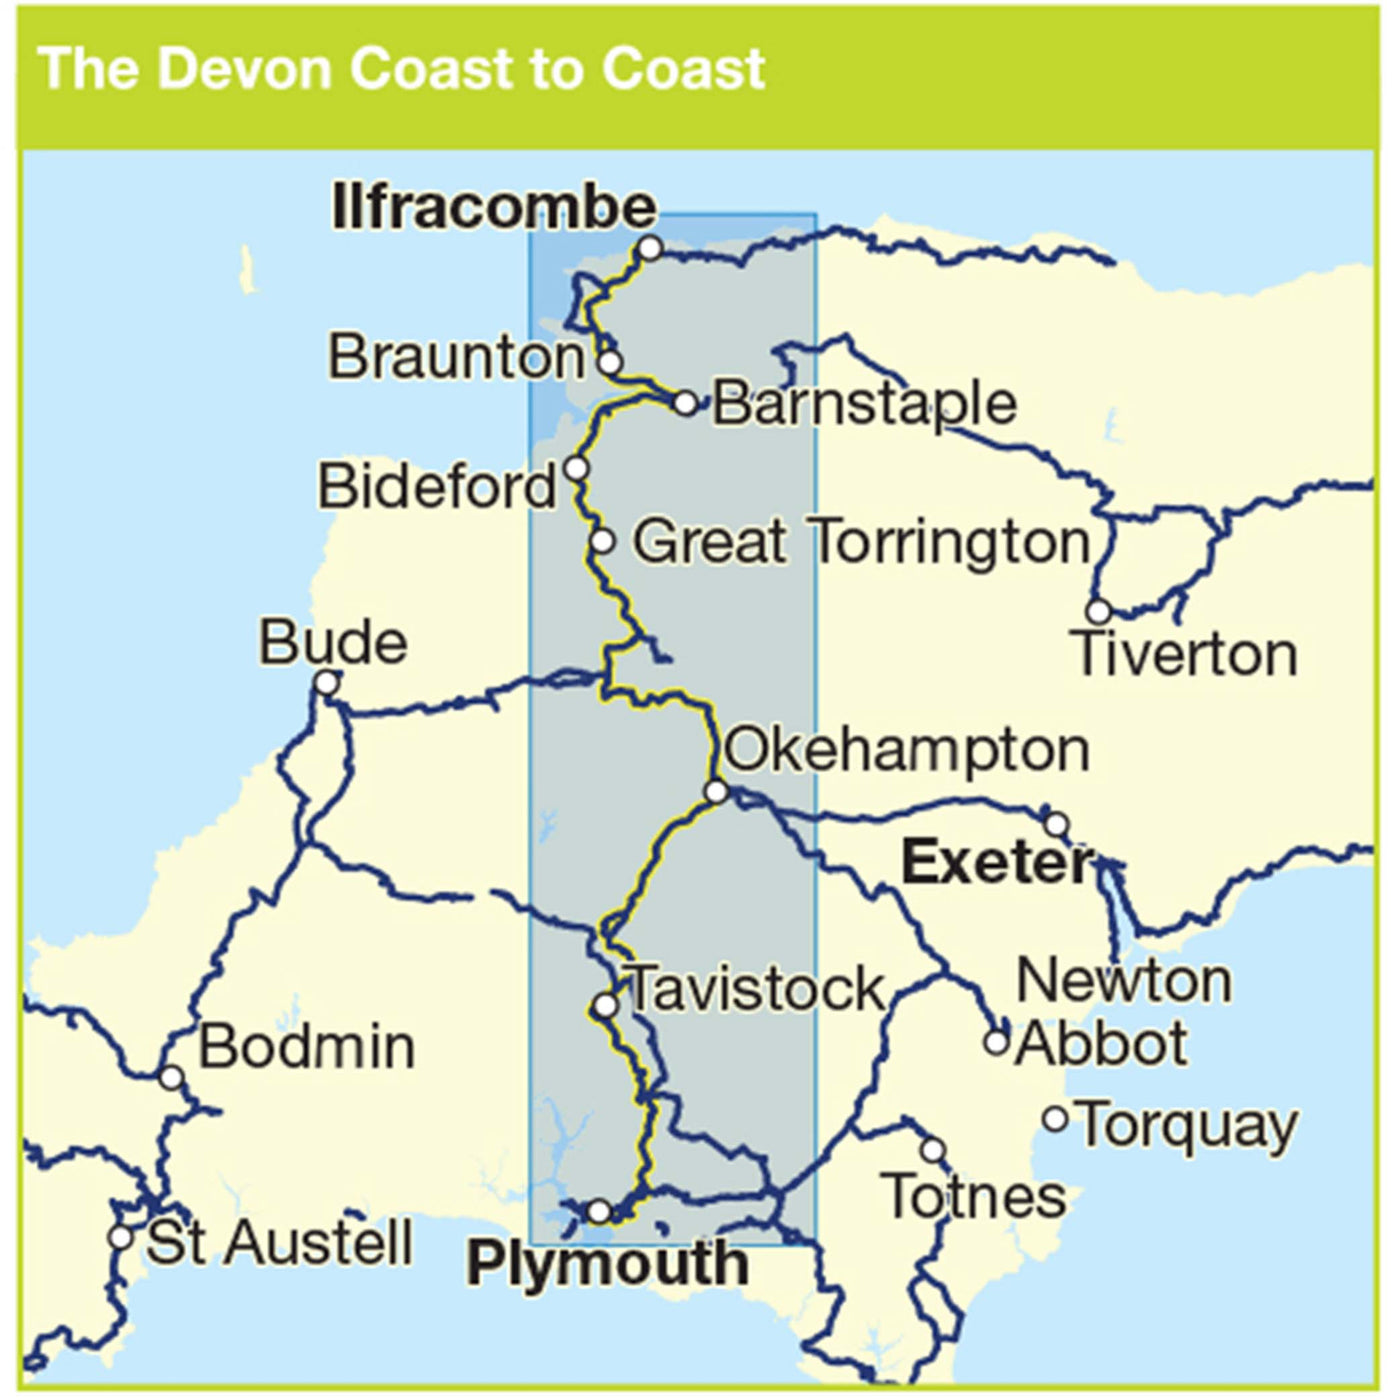 Devon coast to coast cycle route coverage 